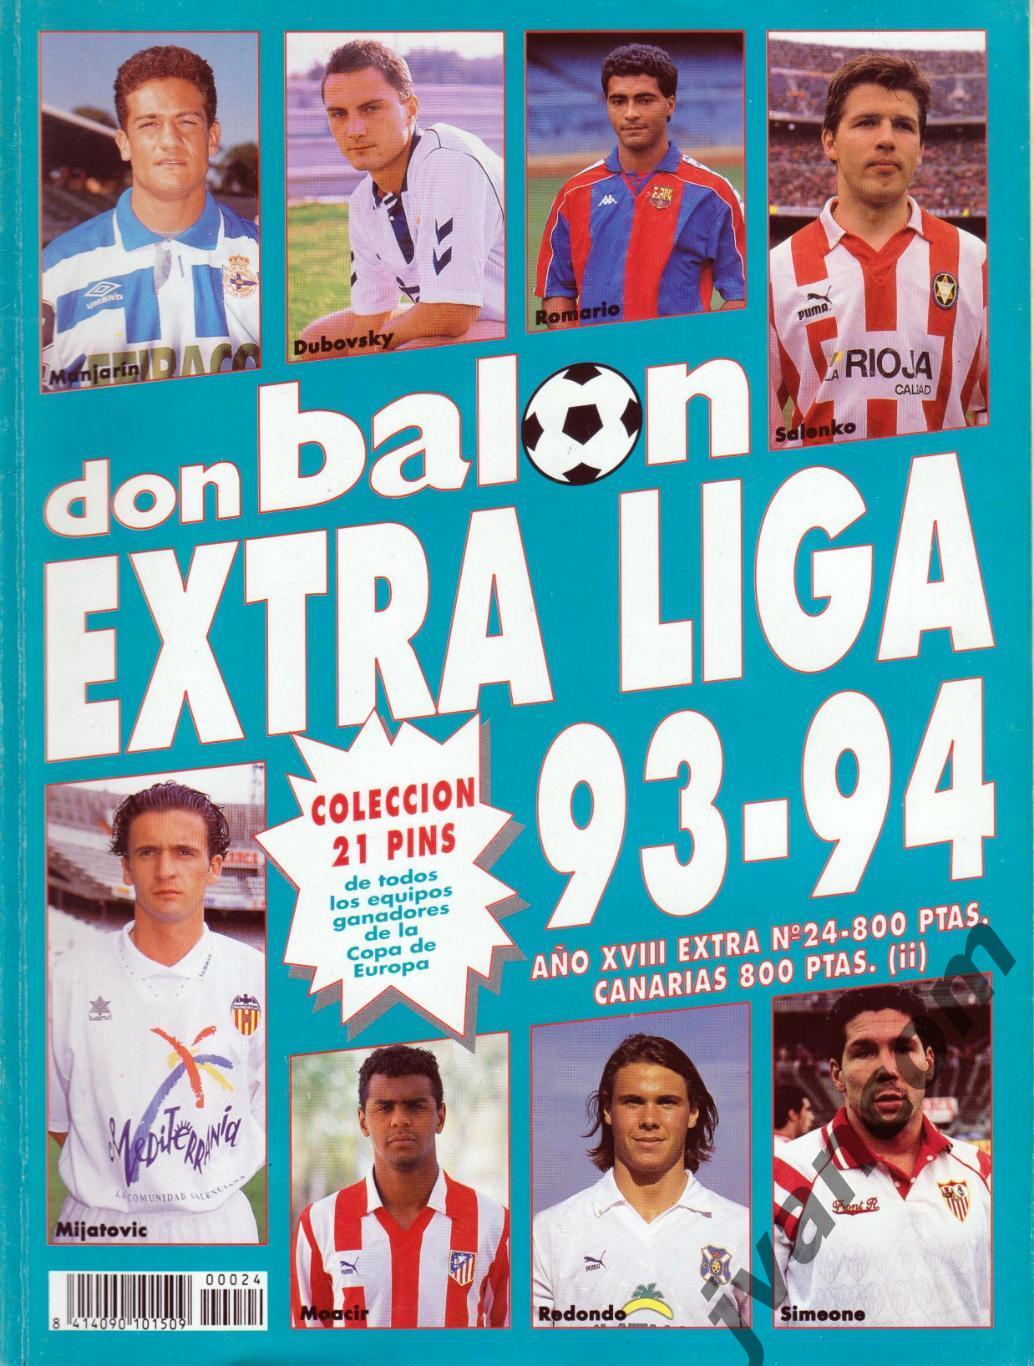 DON BALON EXTRA LIGA 93-94. Чемпионат Испании по футболу. Превью сезона 1993-94.